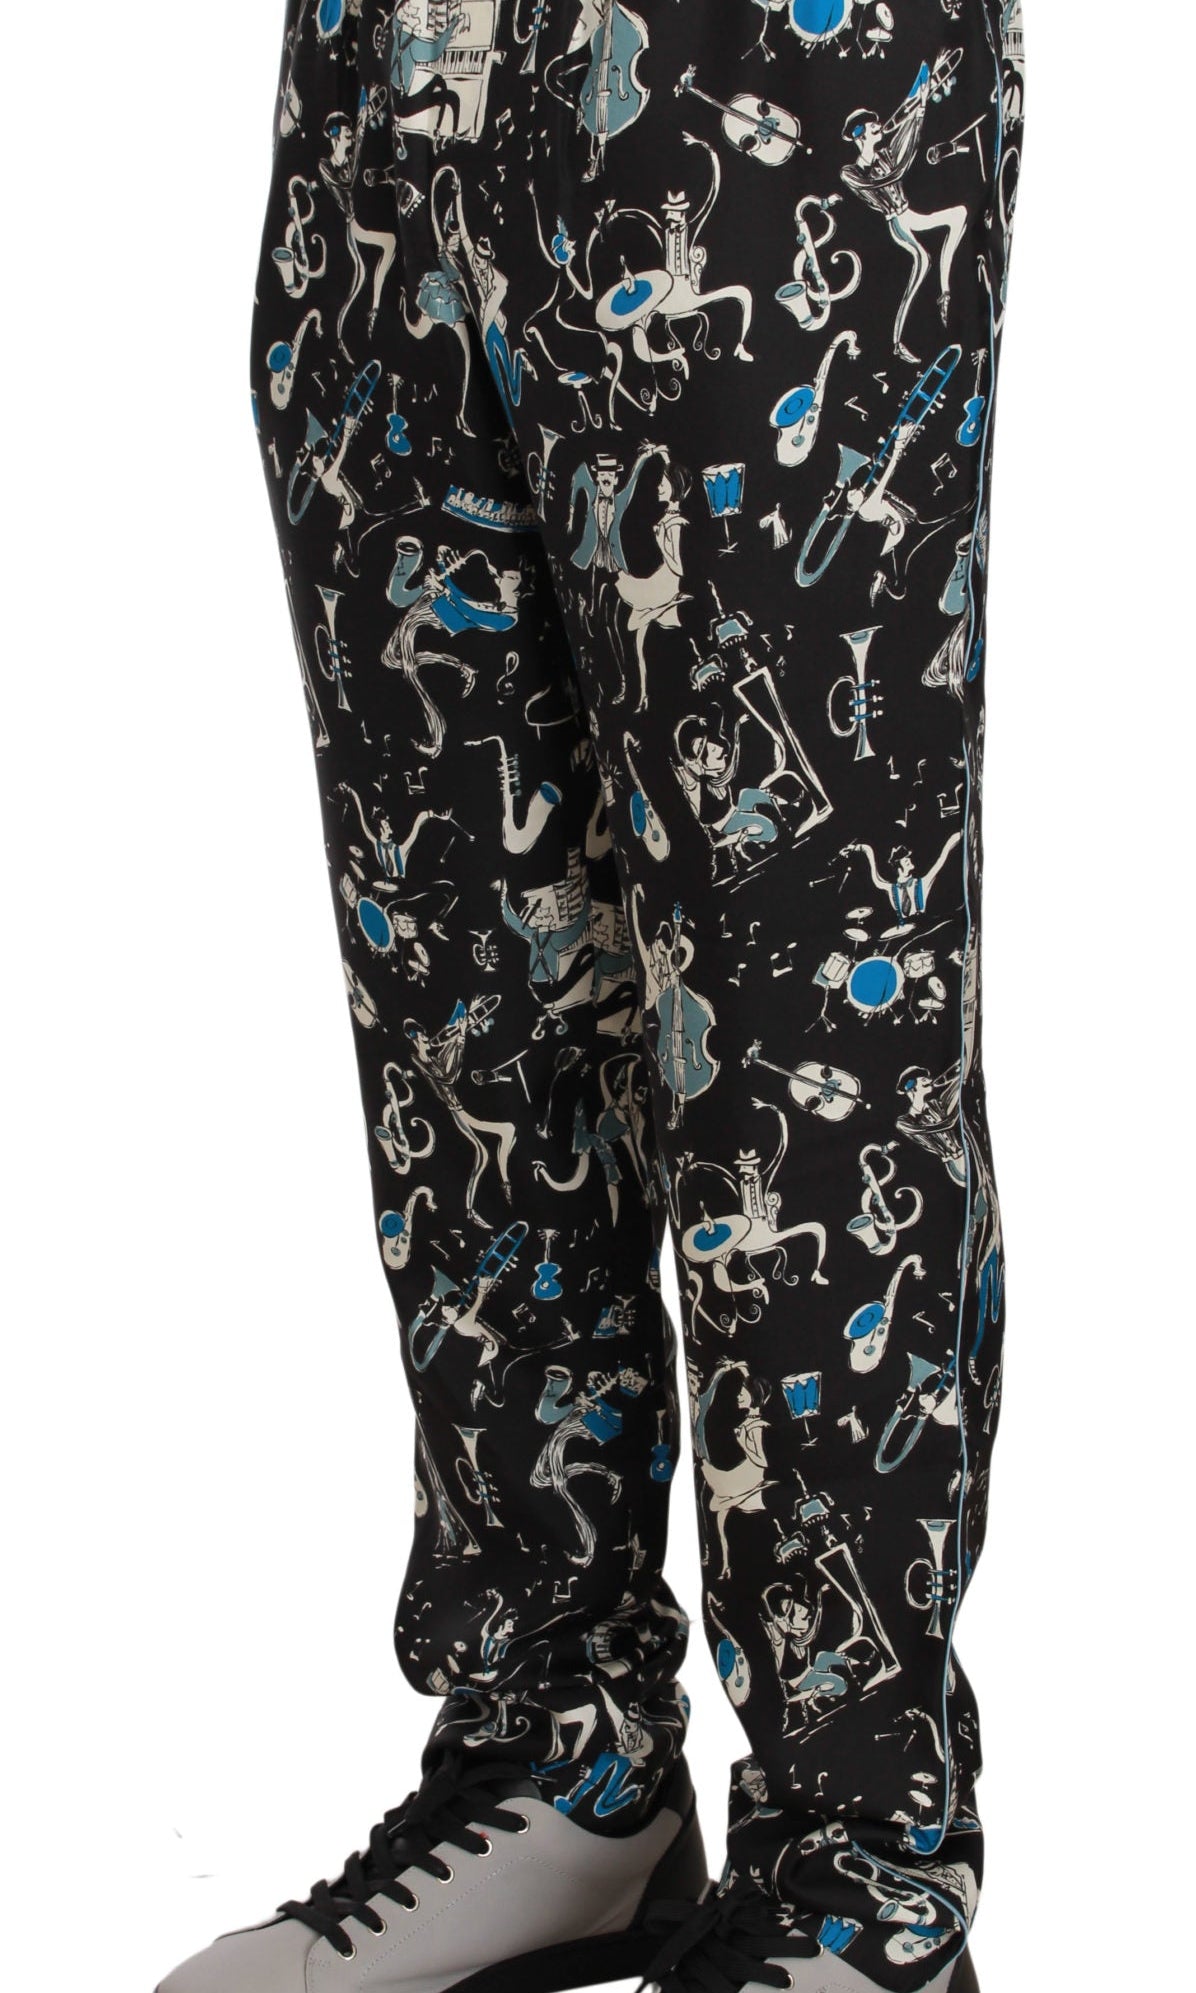 Dolce & Gabbana Black Musical Instrument Sleepwear Pants GENUINE AUTHENTIC BRAND LLC